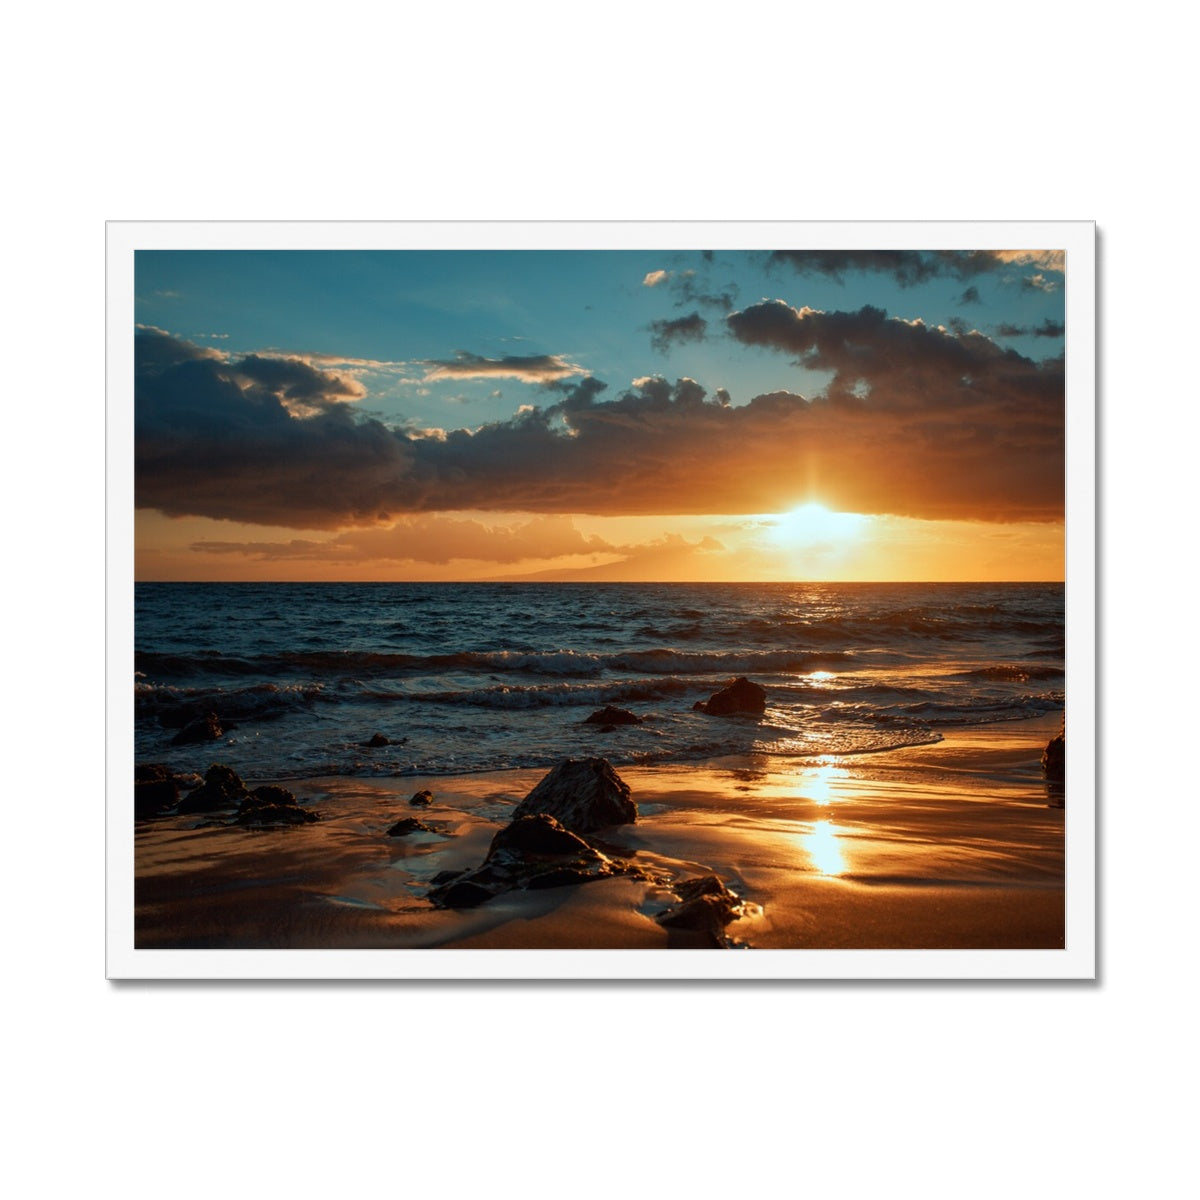 Maui Sunset Framed Print